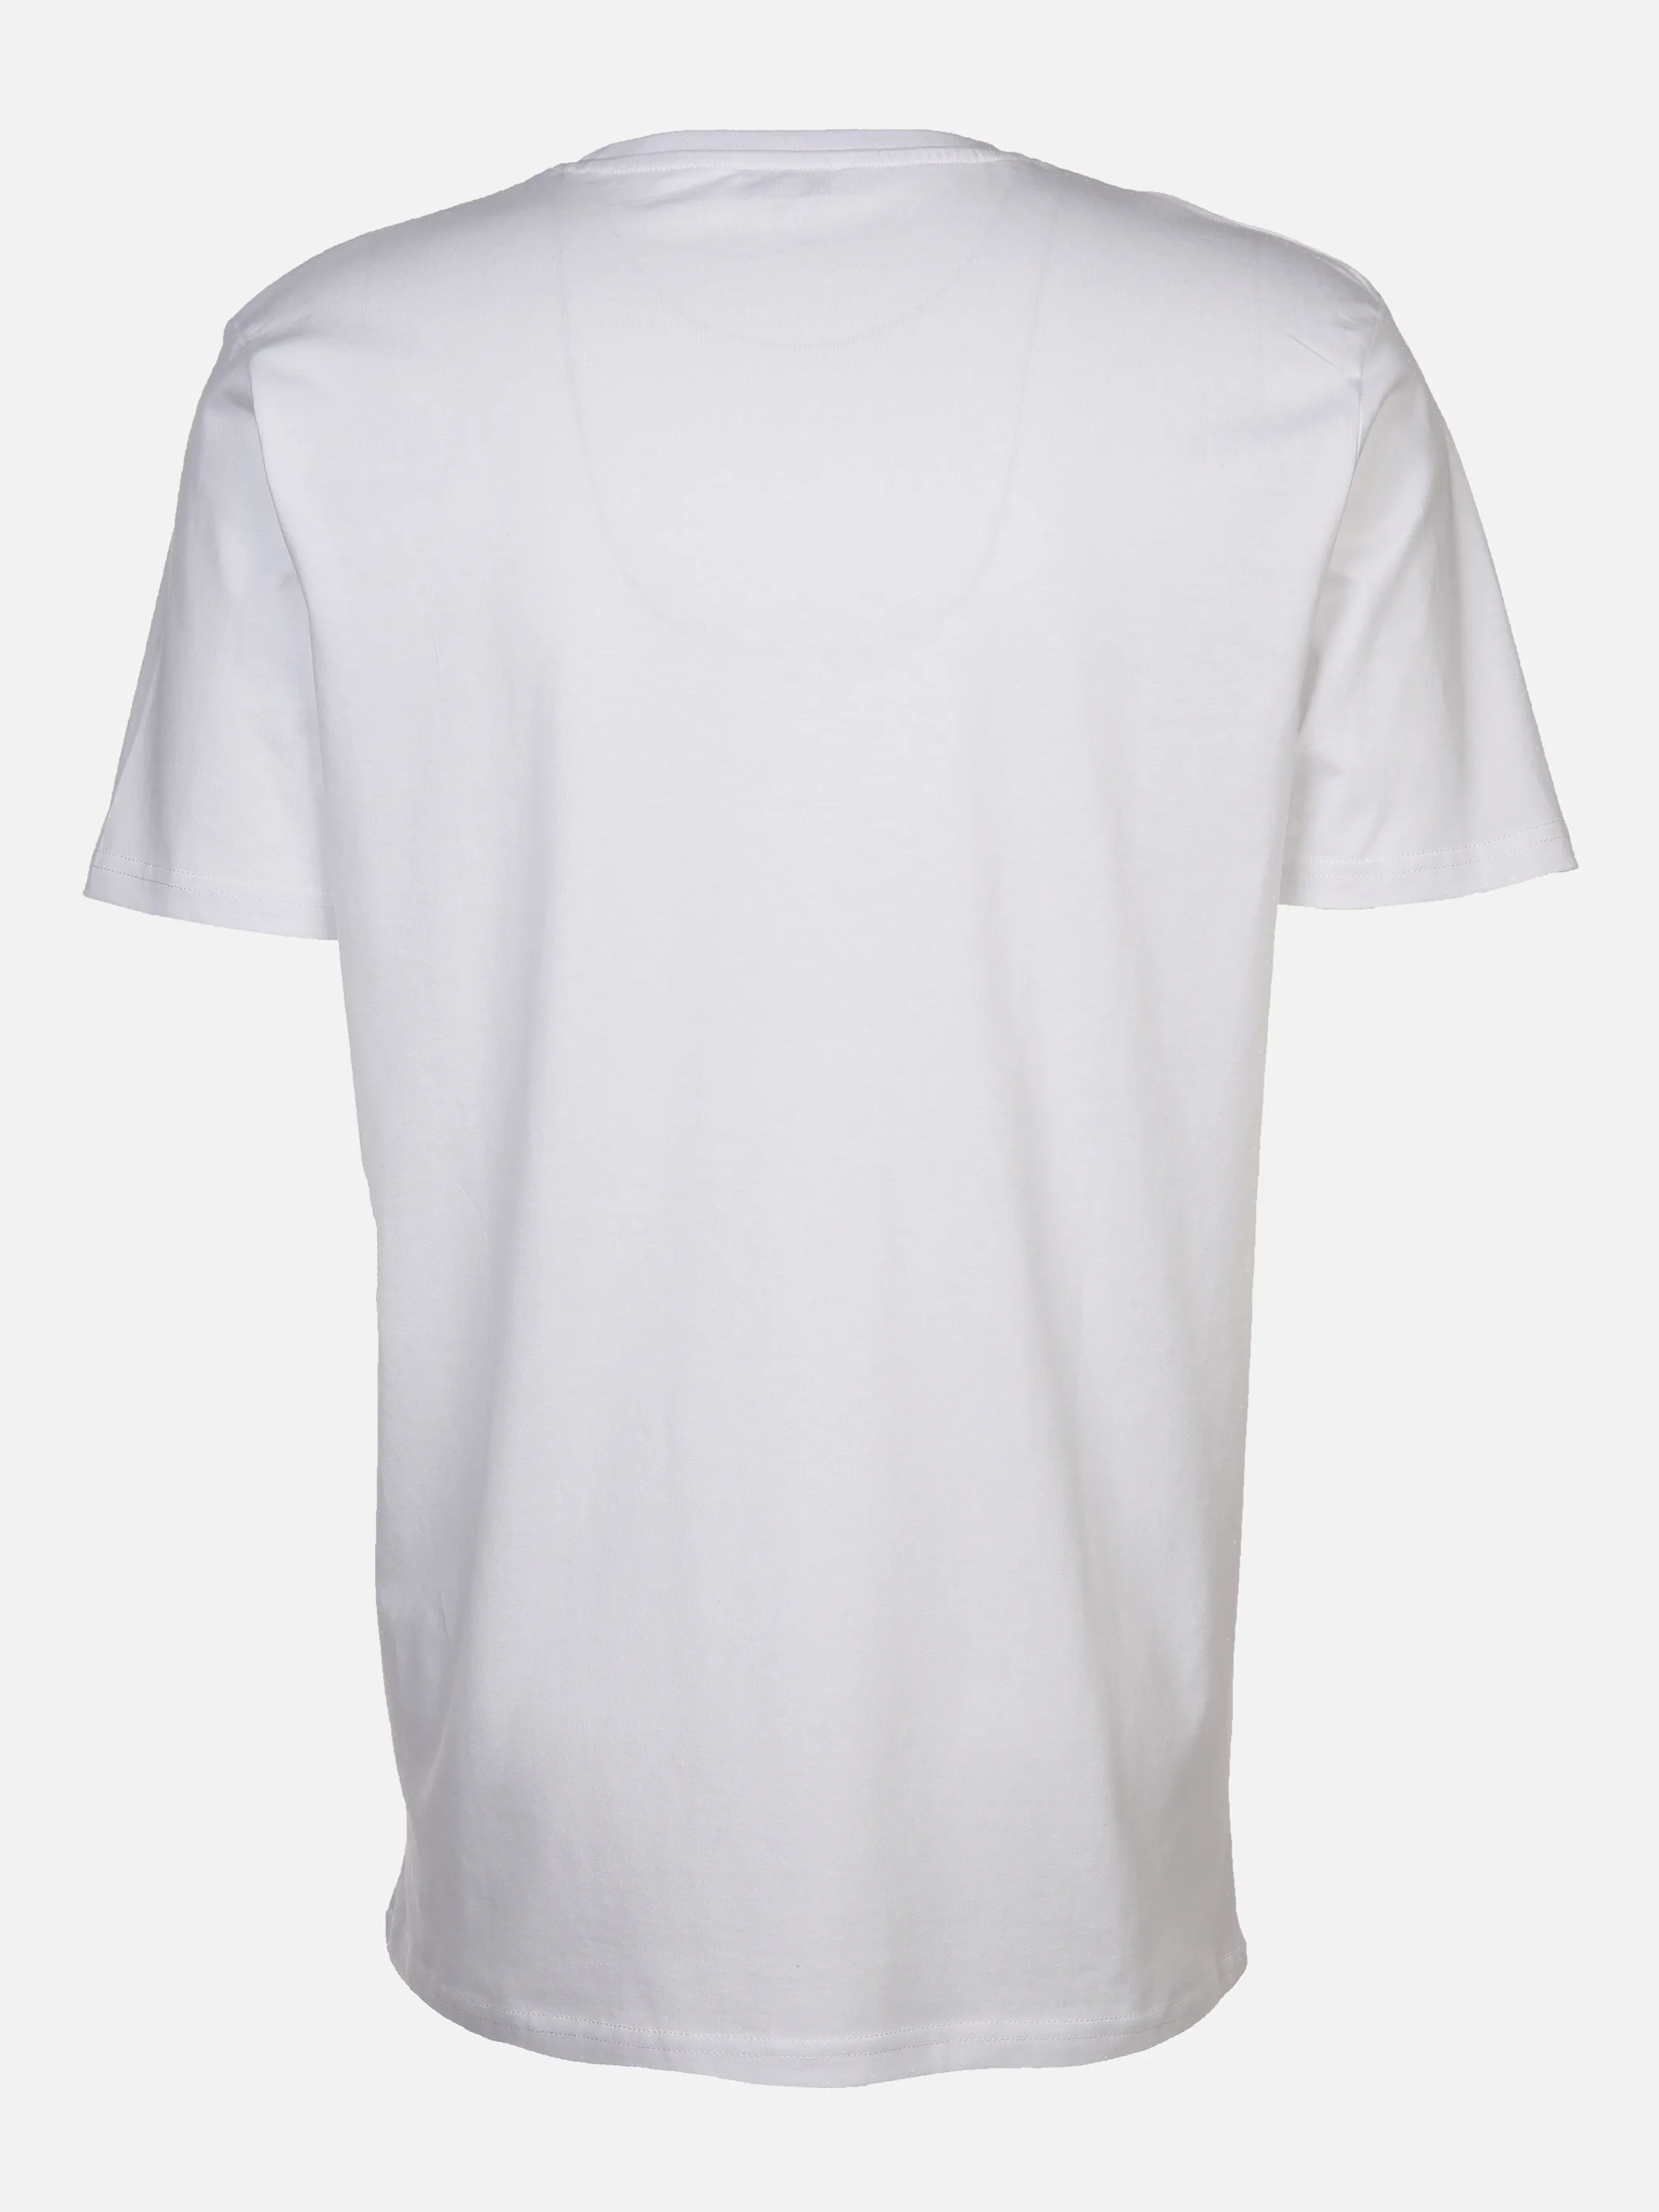 U.S. Polo Assn. He. T-Shirt 1/2 Arm Logo 1890 Weiß 881277 WHITE 2